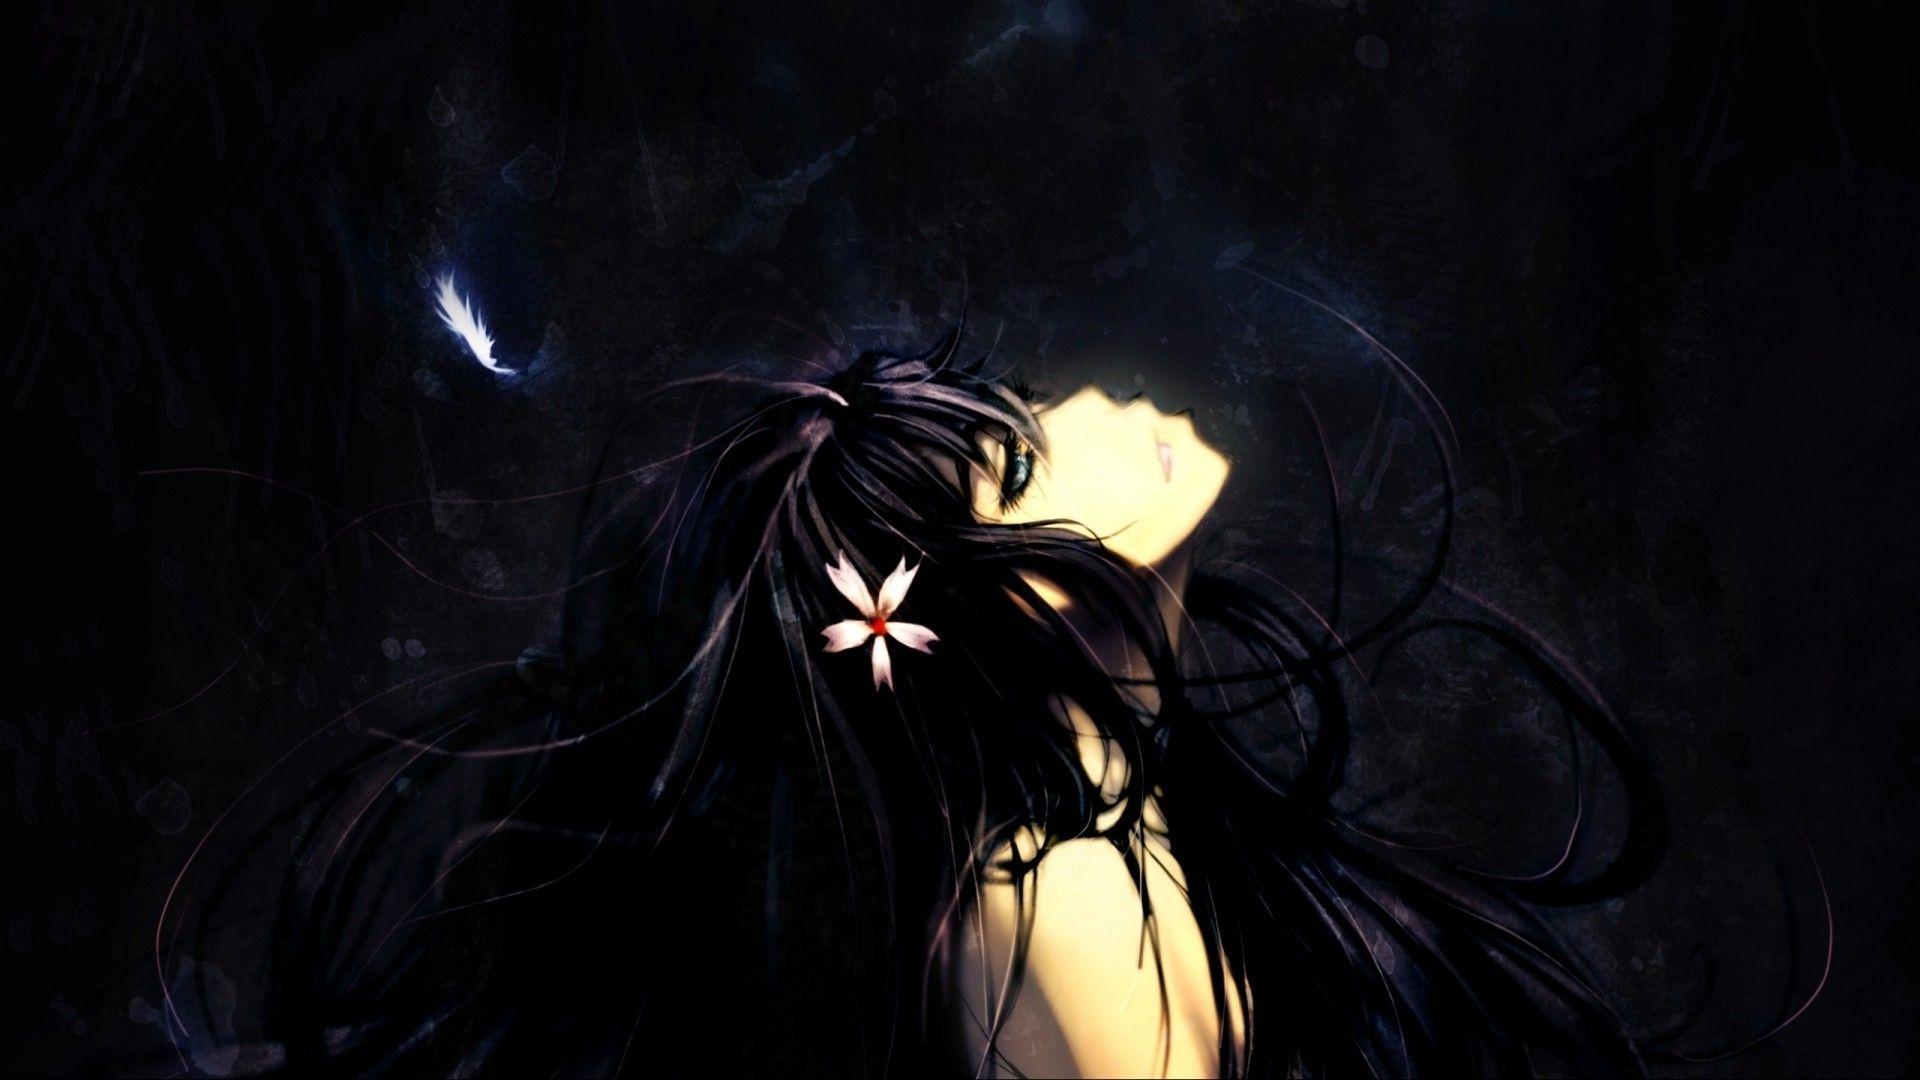 Dark Anime Girl Wallpapers - Top Free Dark Anime Girl Backgrounds